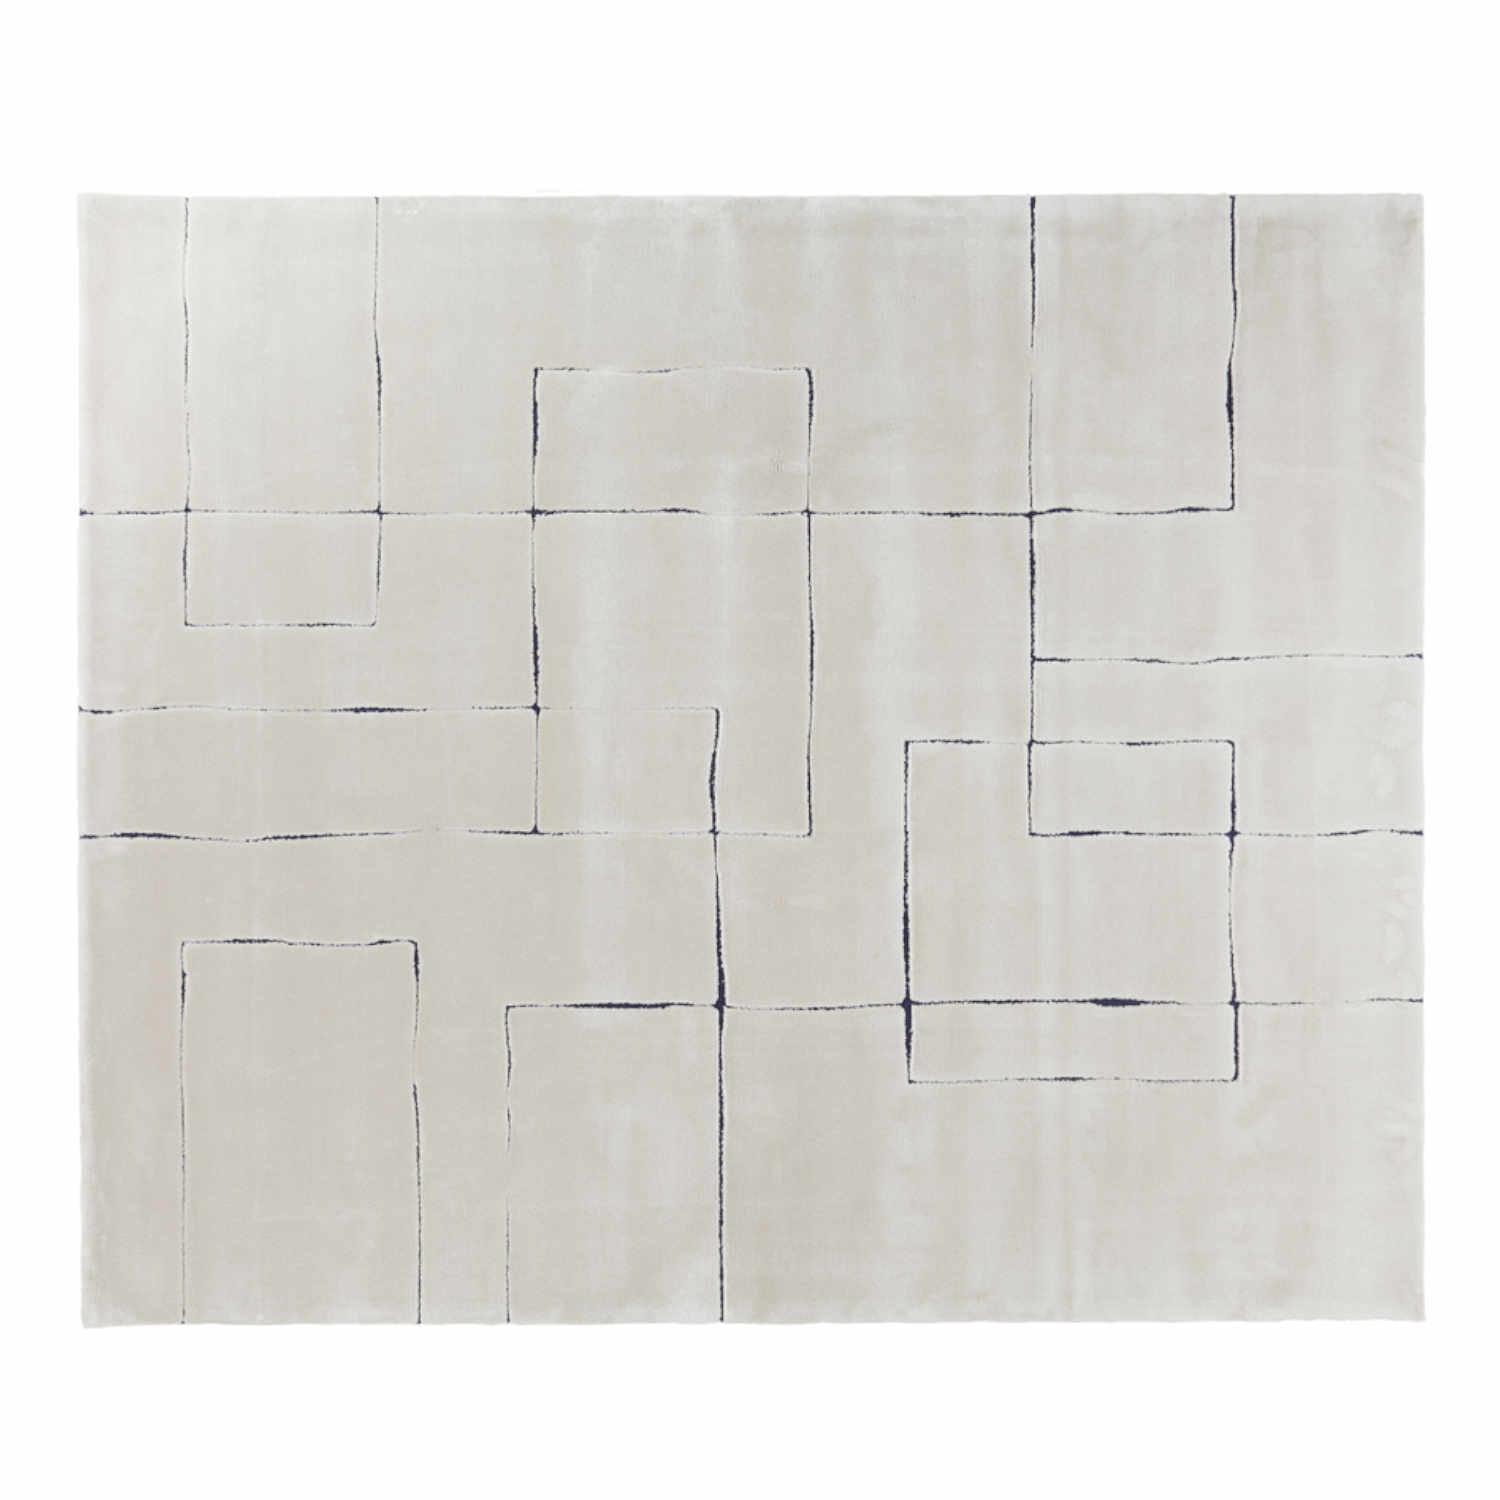 SubZero Teppich, Grösse 200 x 300 cm, Farbe bright white glacy gray von miinu